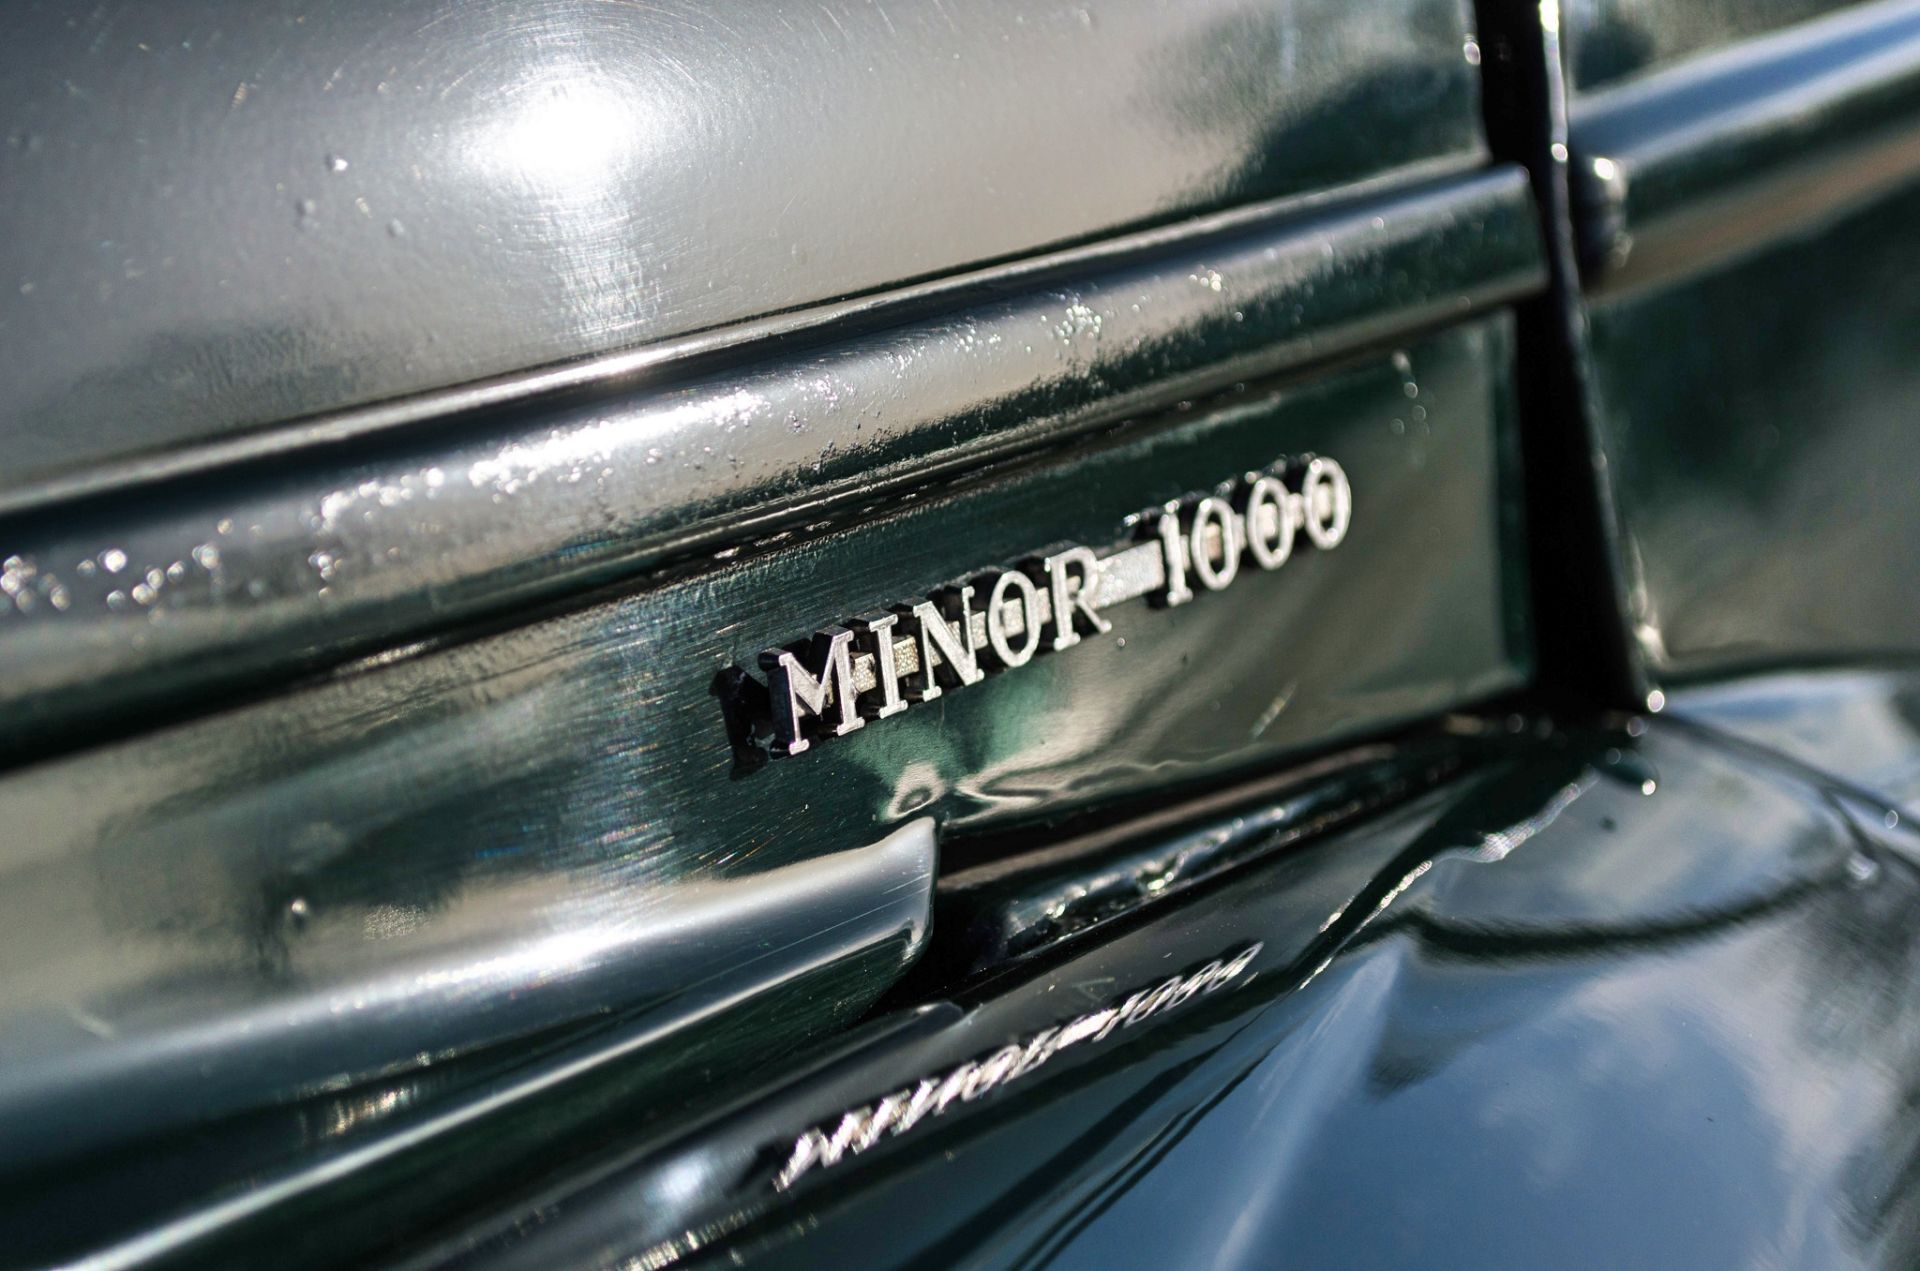 1968 Morris Minor 1000 1098cc series V 2 door convertible - Image 51 of 58